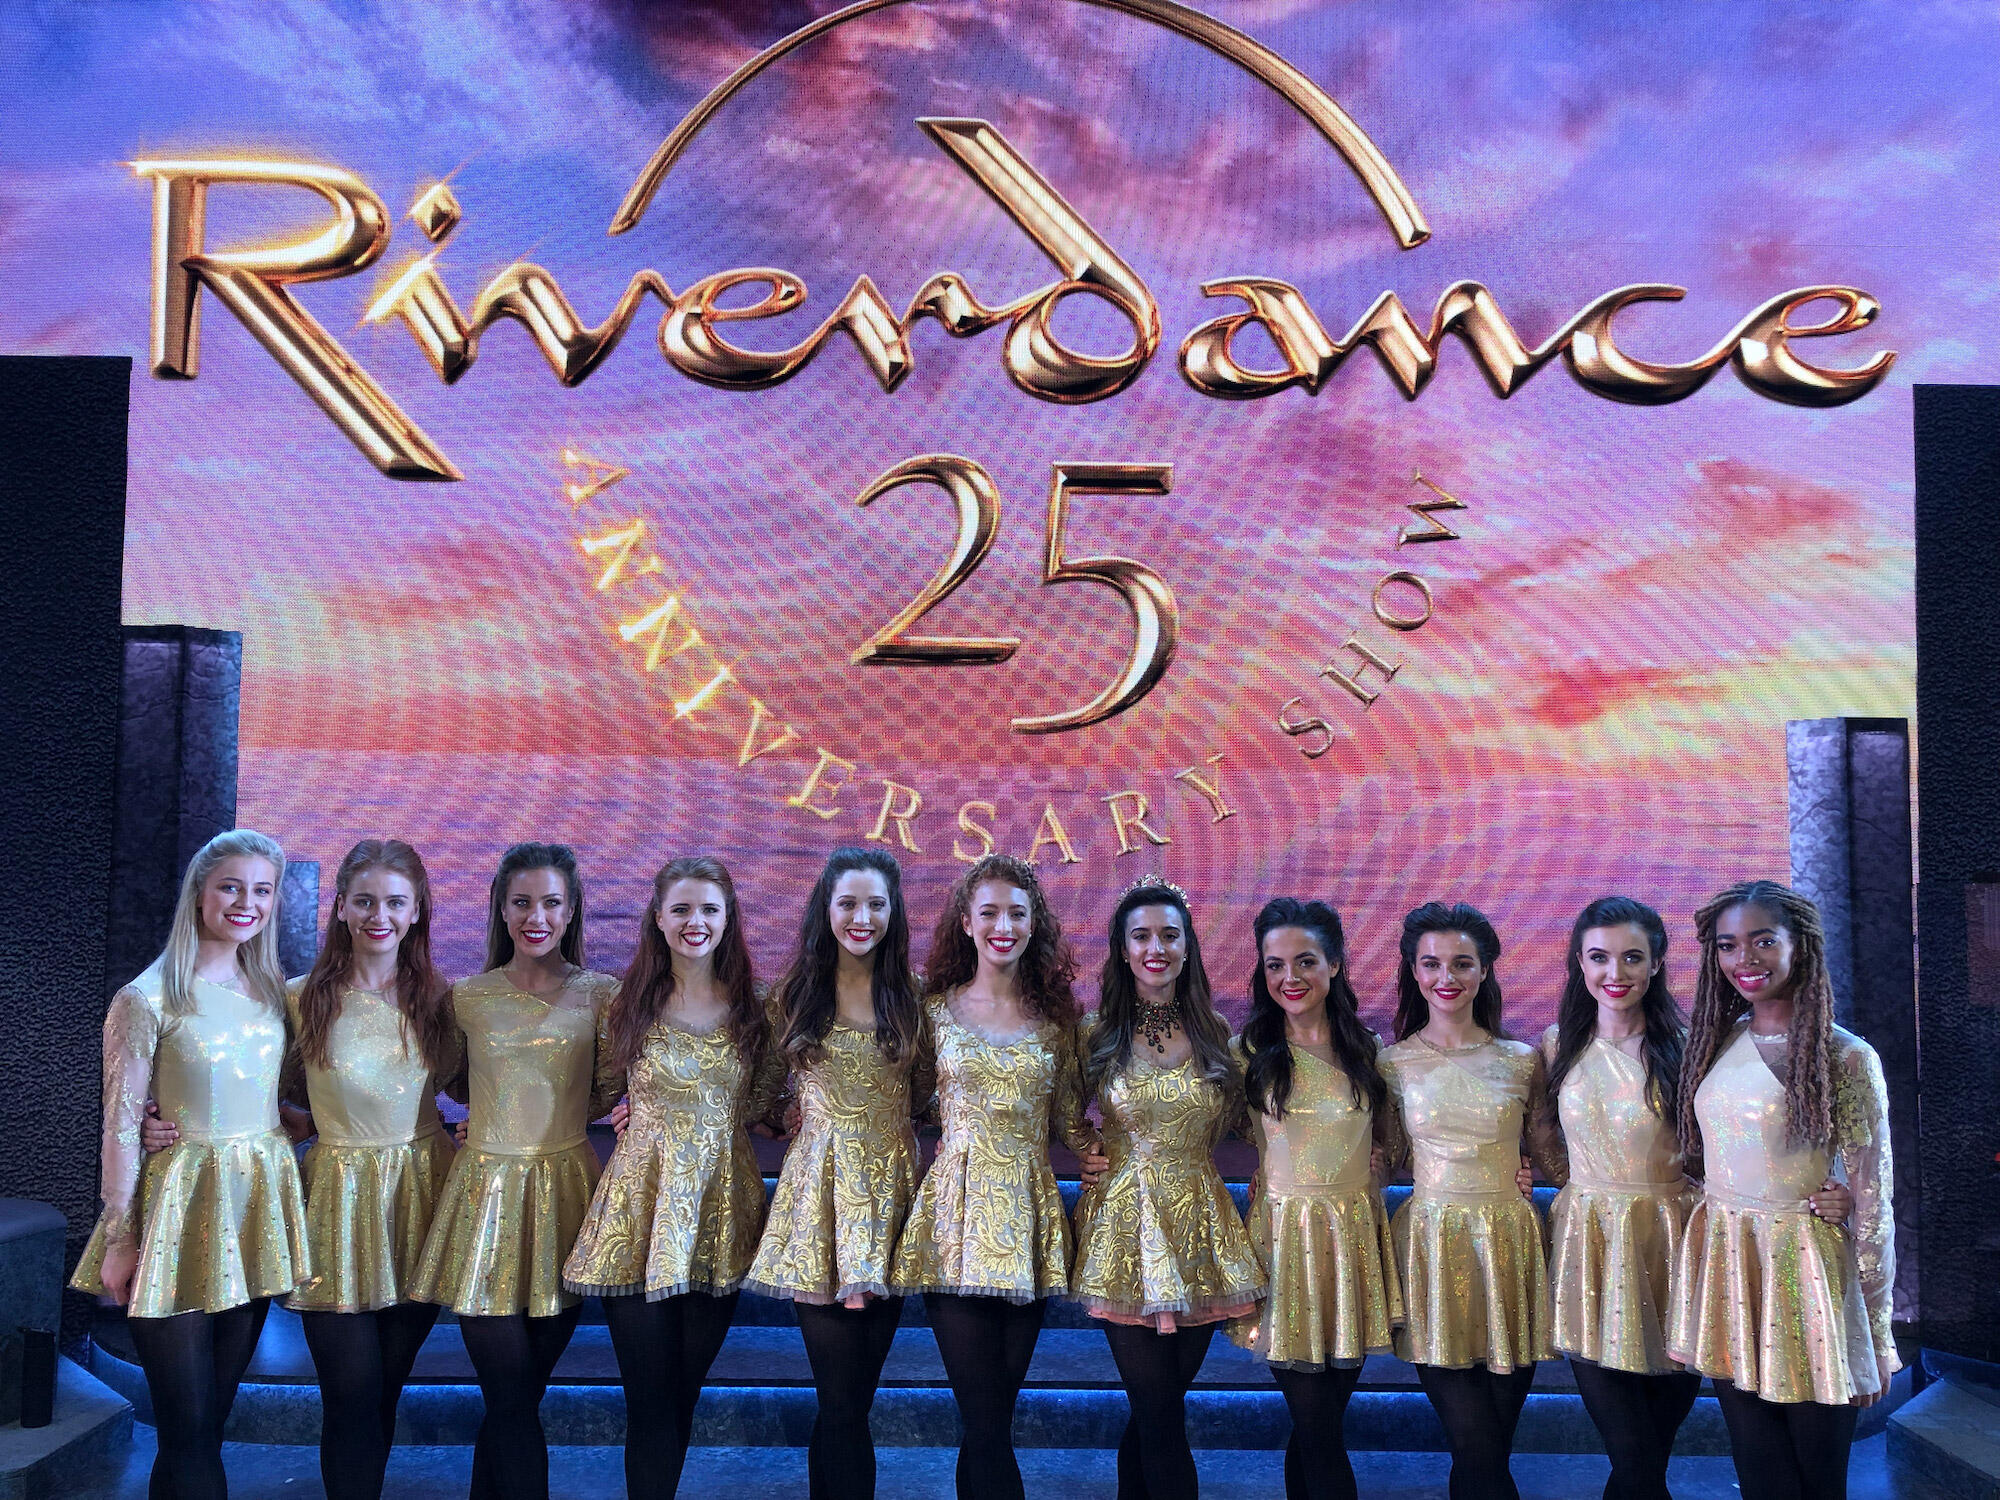 the female cast of Riverdance